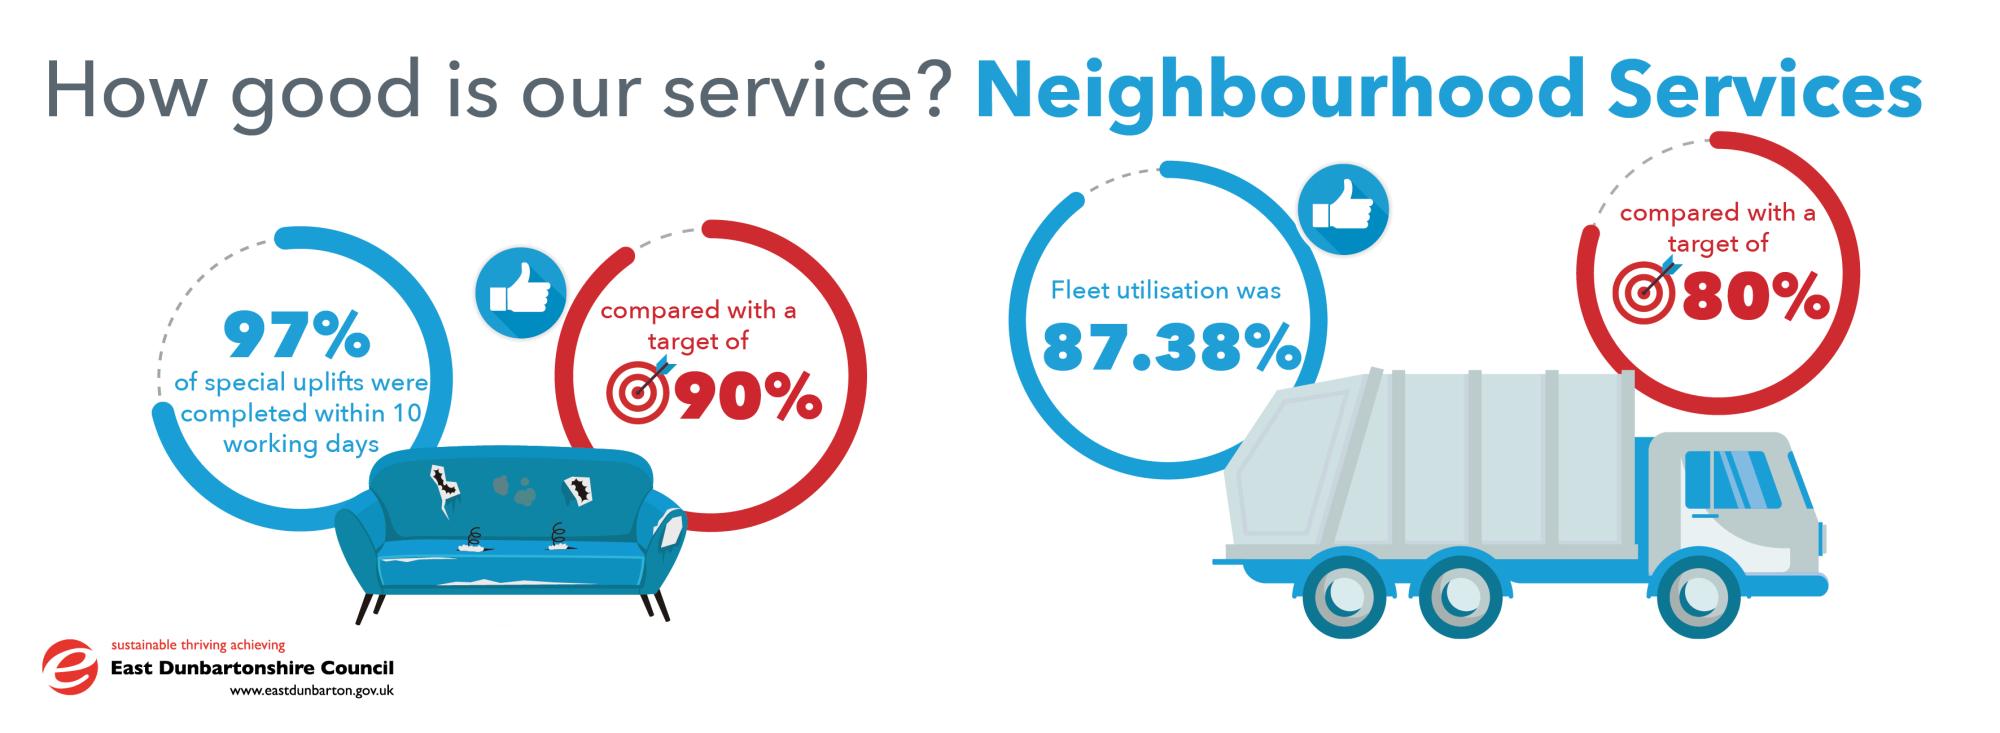 neighbourhood services infographic